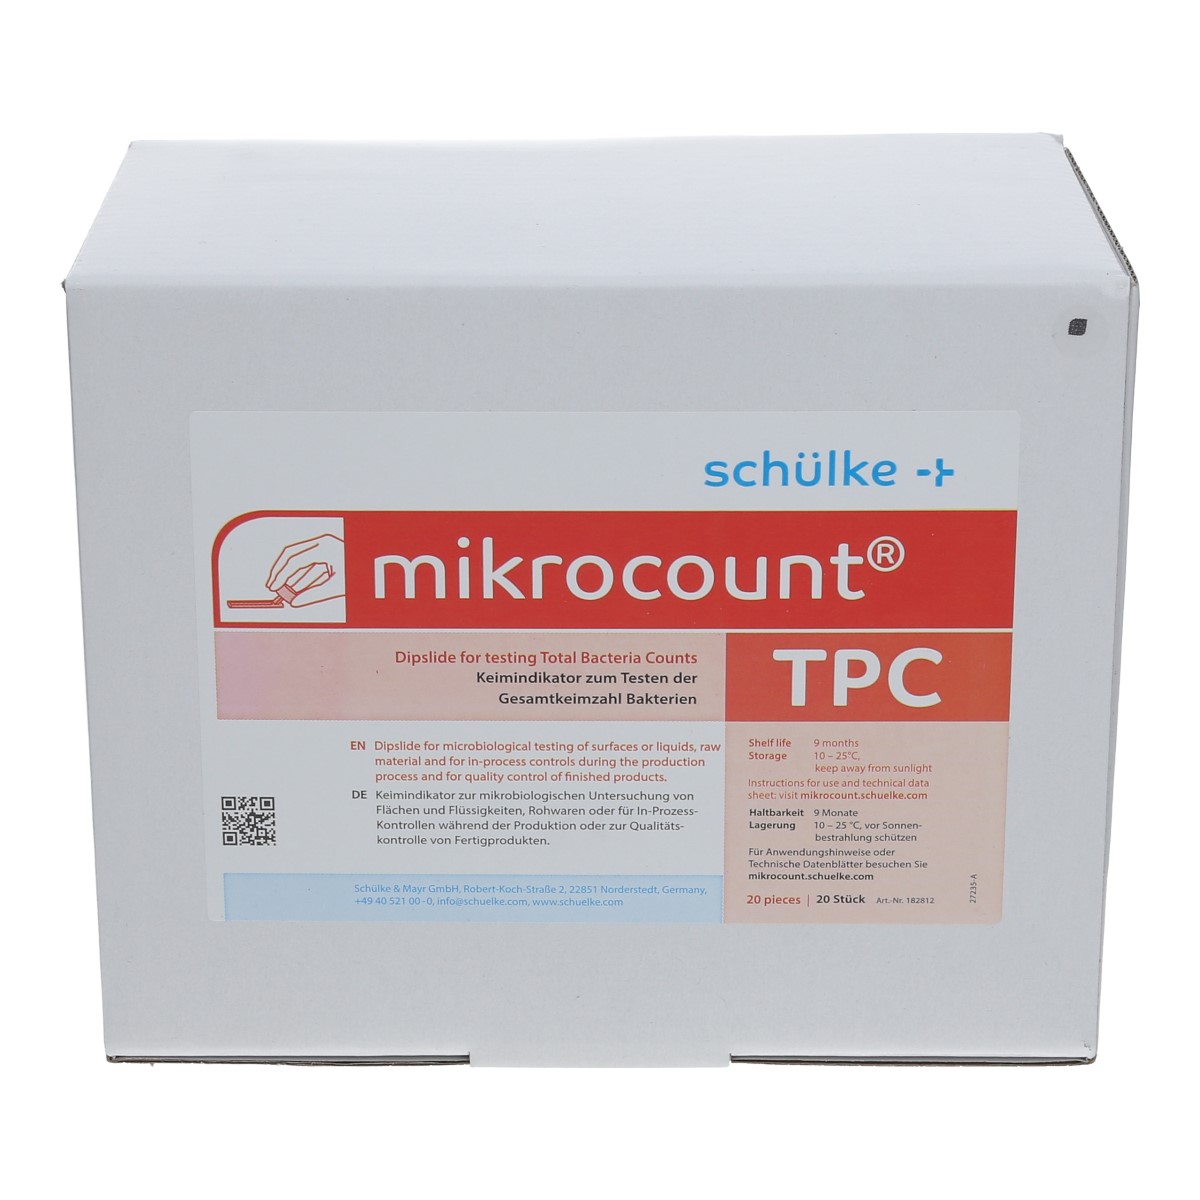 schülke mikrocount TPC